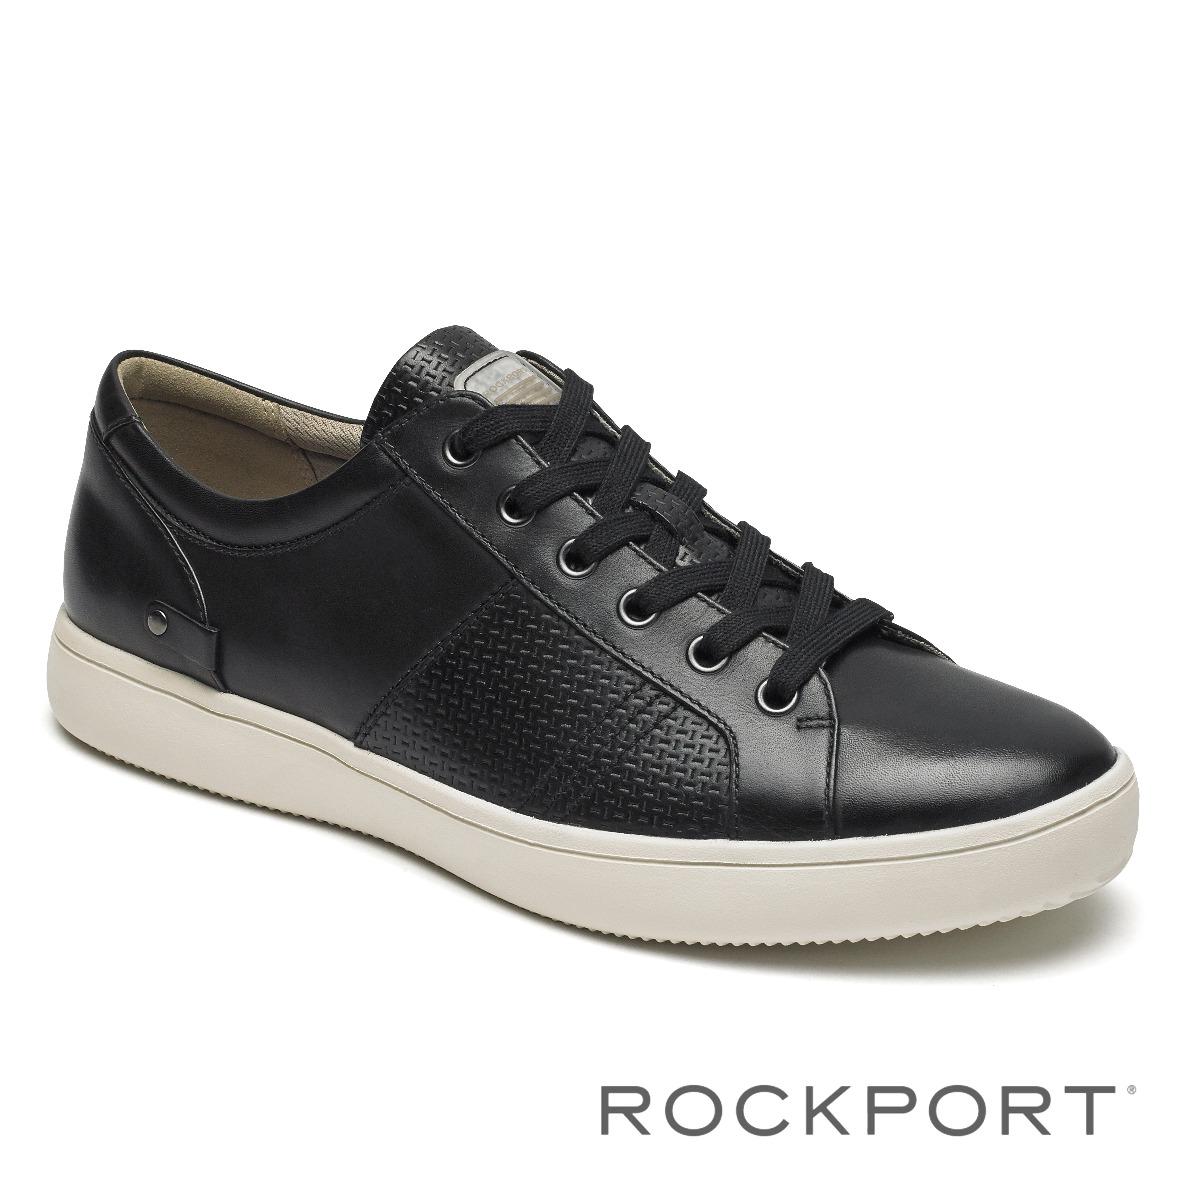 rockport sneakers mens